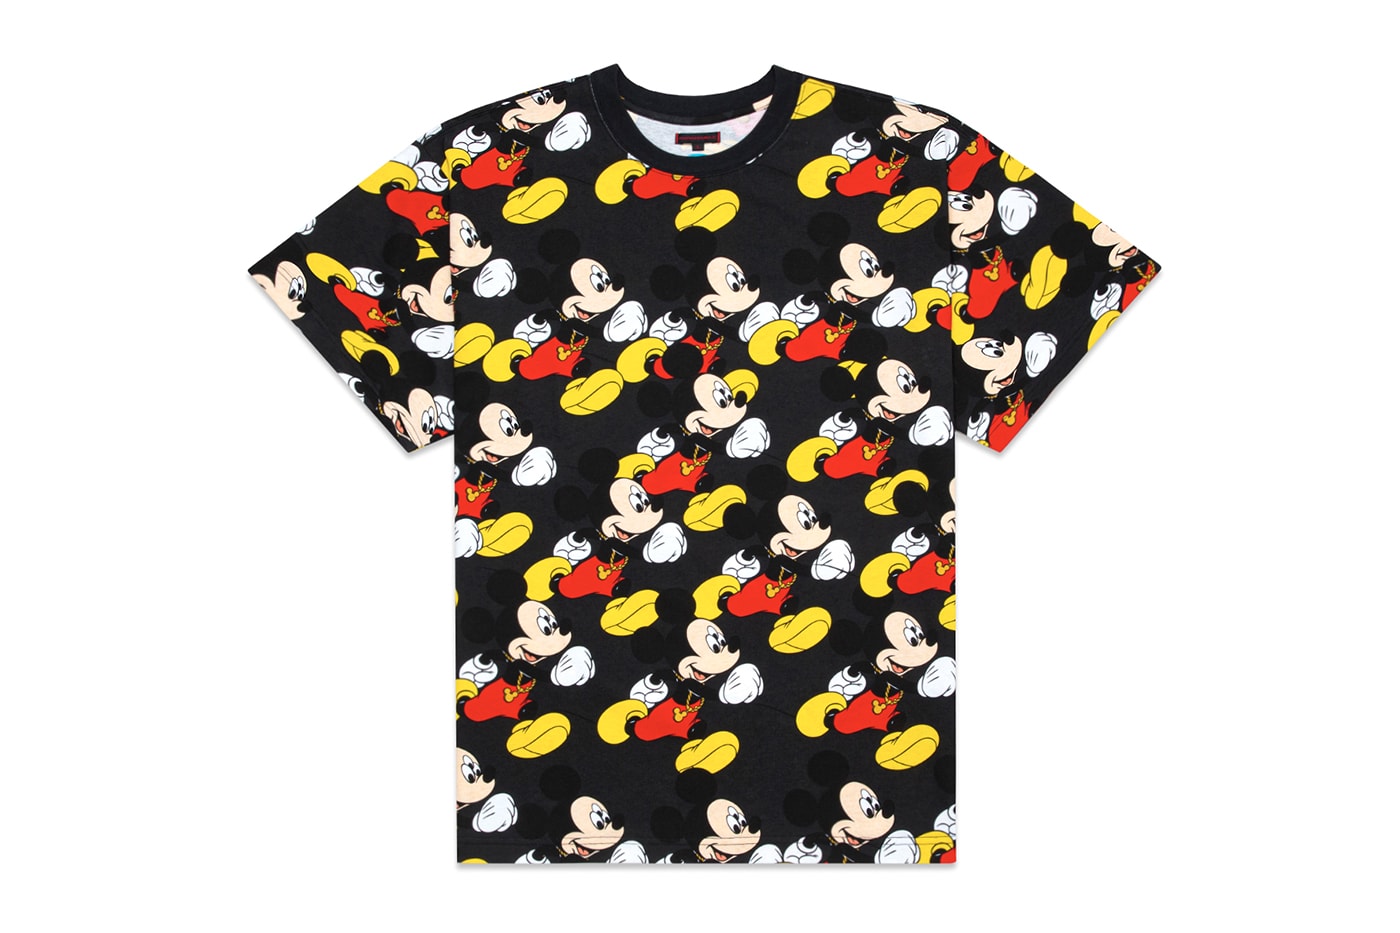 3125C CLOT Medicom Toy BE@RBRICK 3-Eyed Mickey Release Info Date Buy Price Edison Chen Disney Mickey Mouse